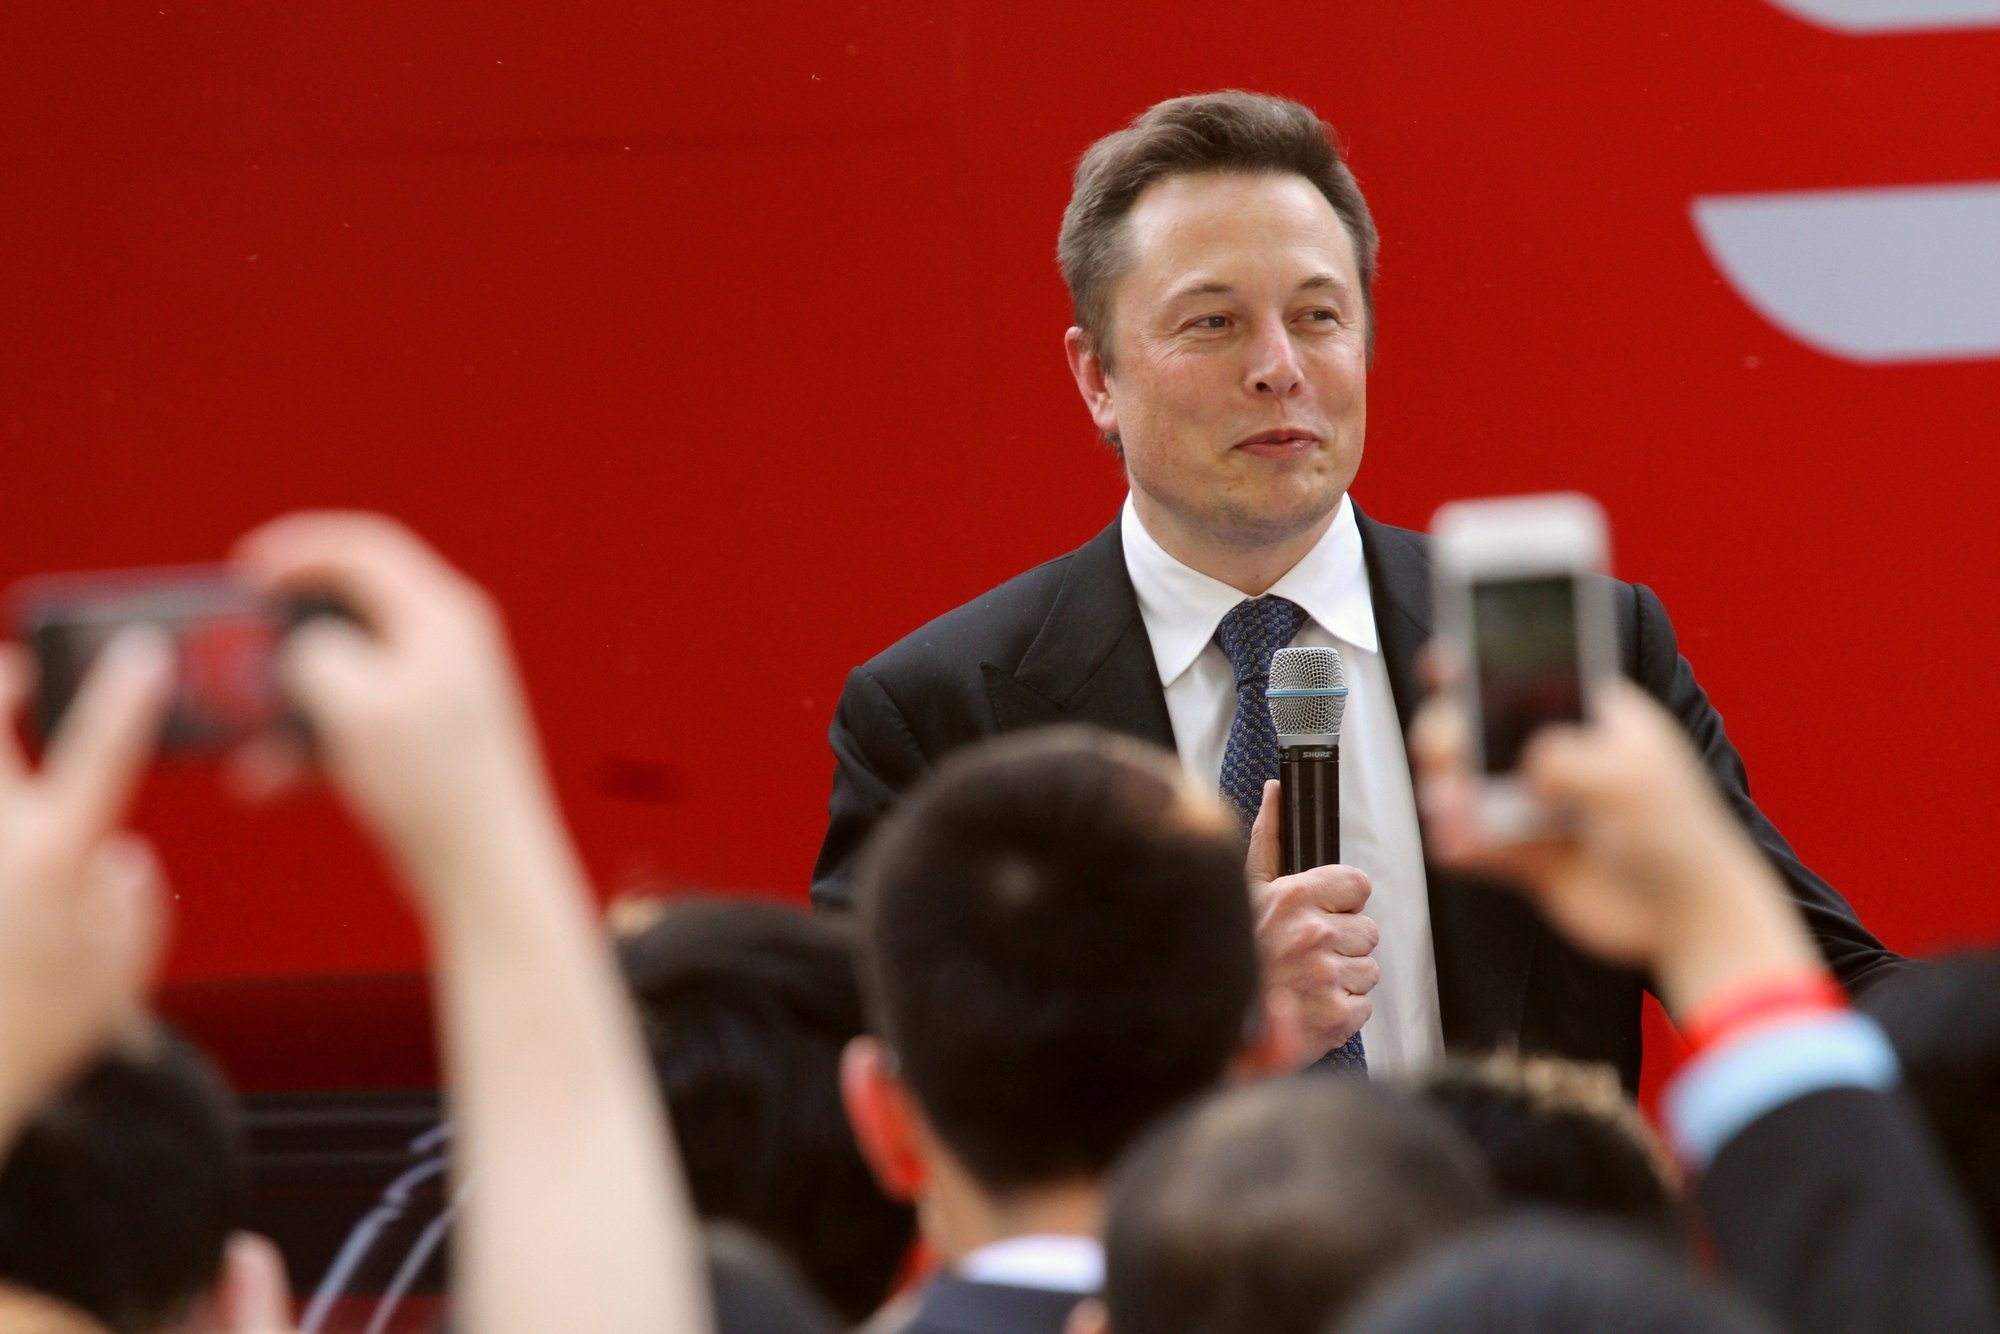 Jack Sweeney le pidió a Elon Musk un Tesla o una pasantía.